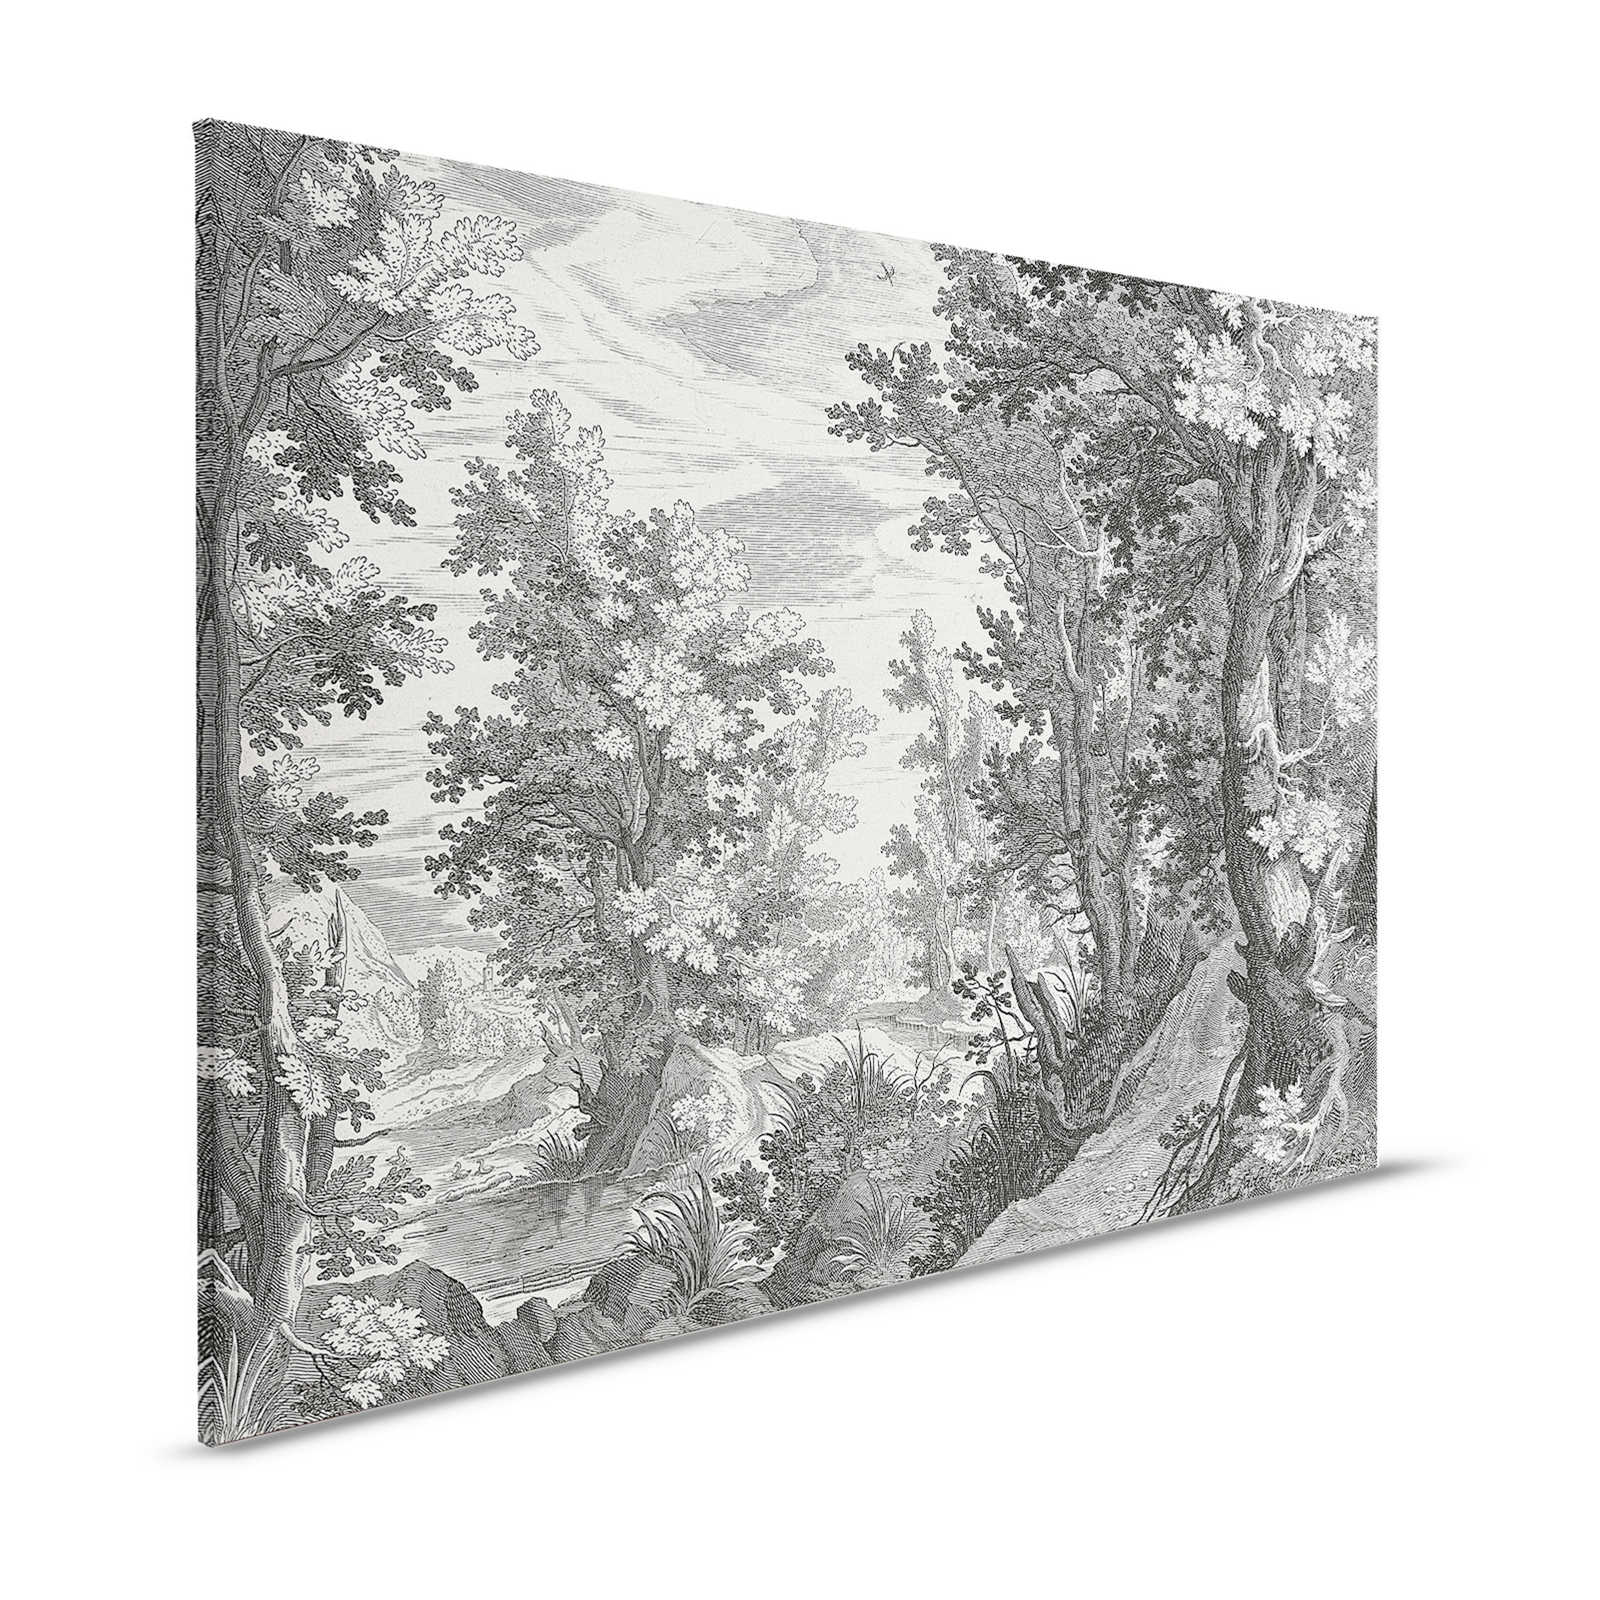 Fancy Forest 3 - Canvas painting Landscape Copperplate Black & White - 1.20 m x 0.80 m
